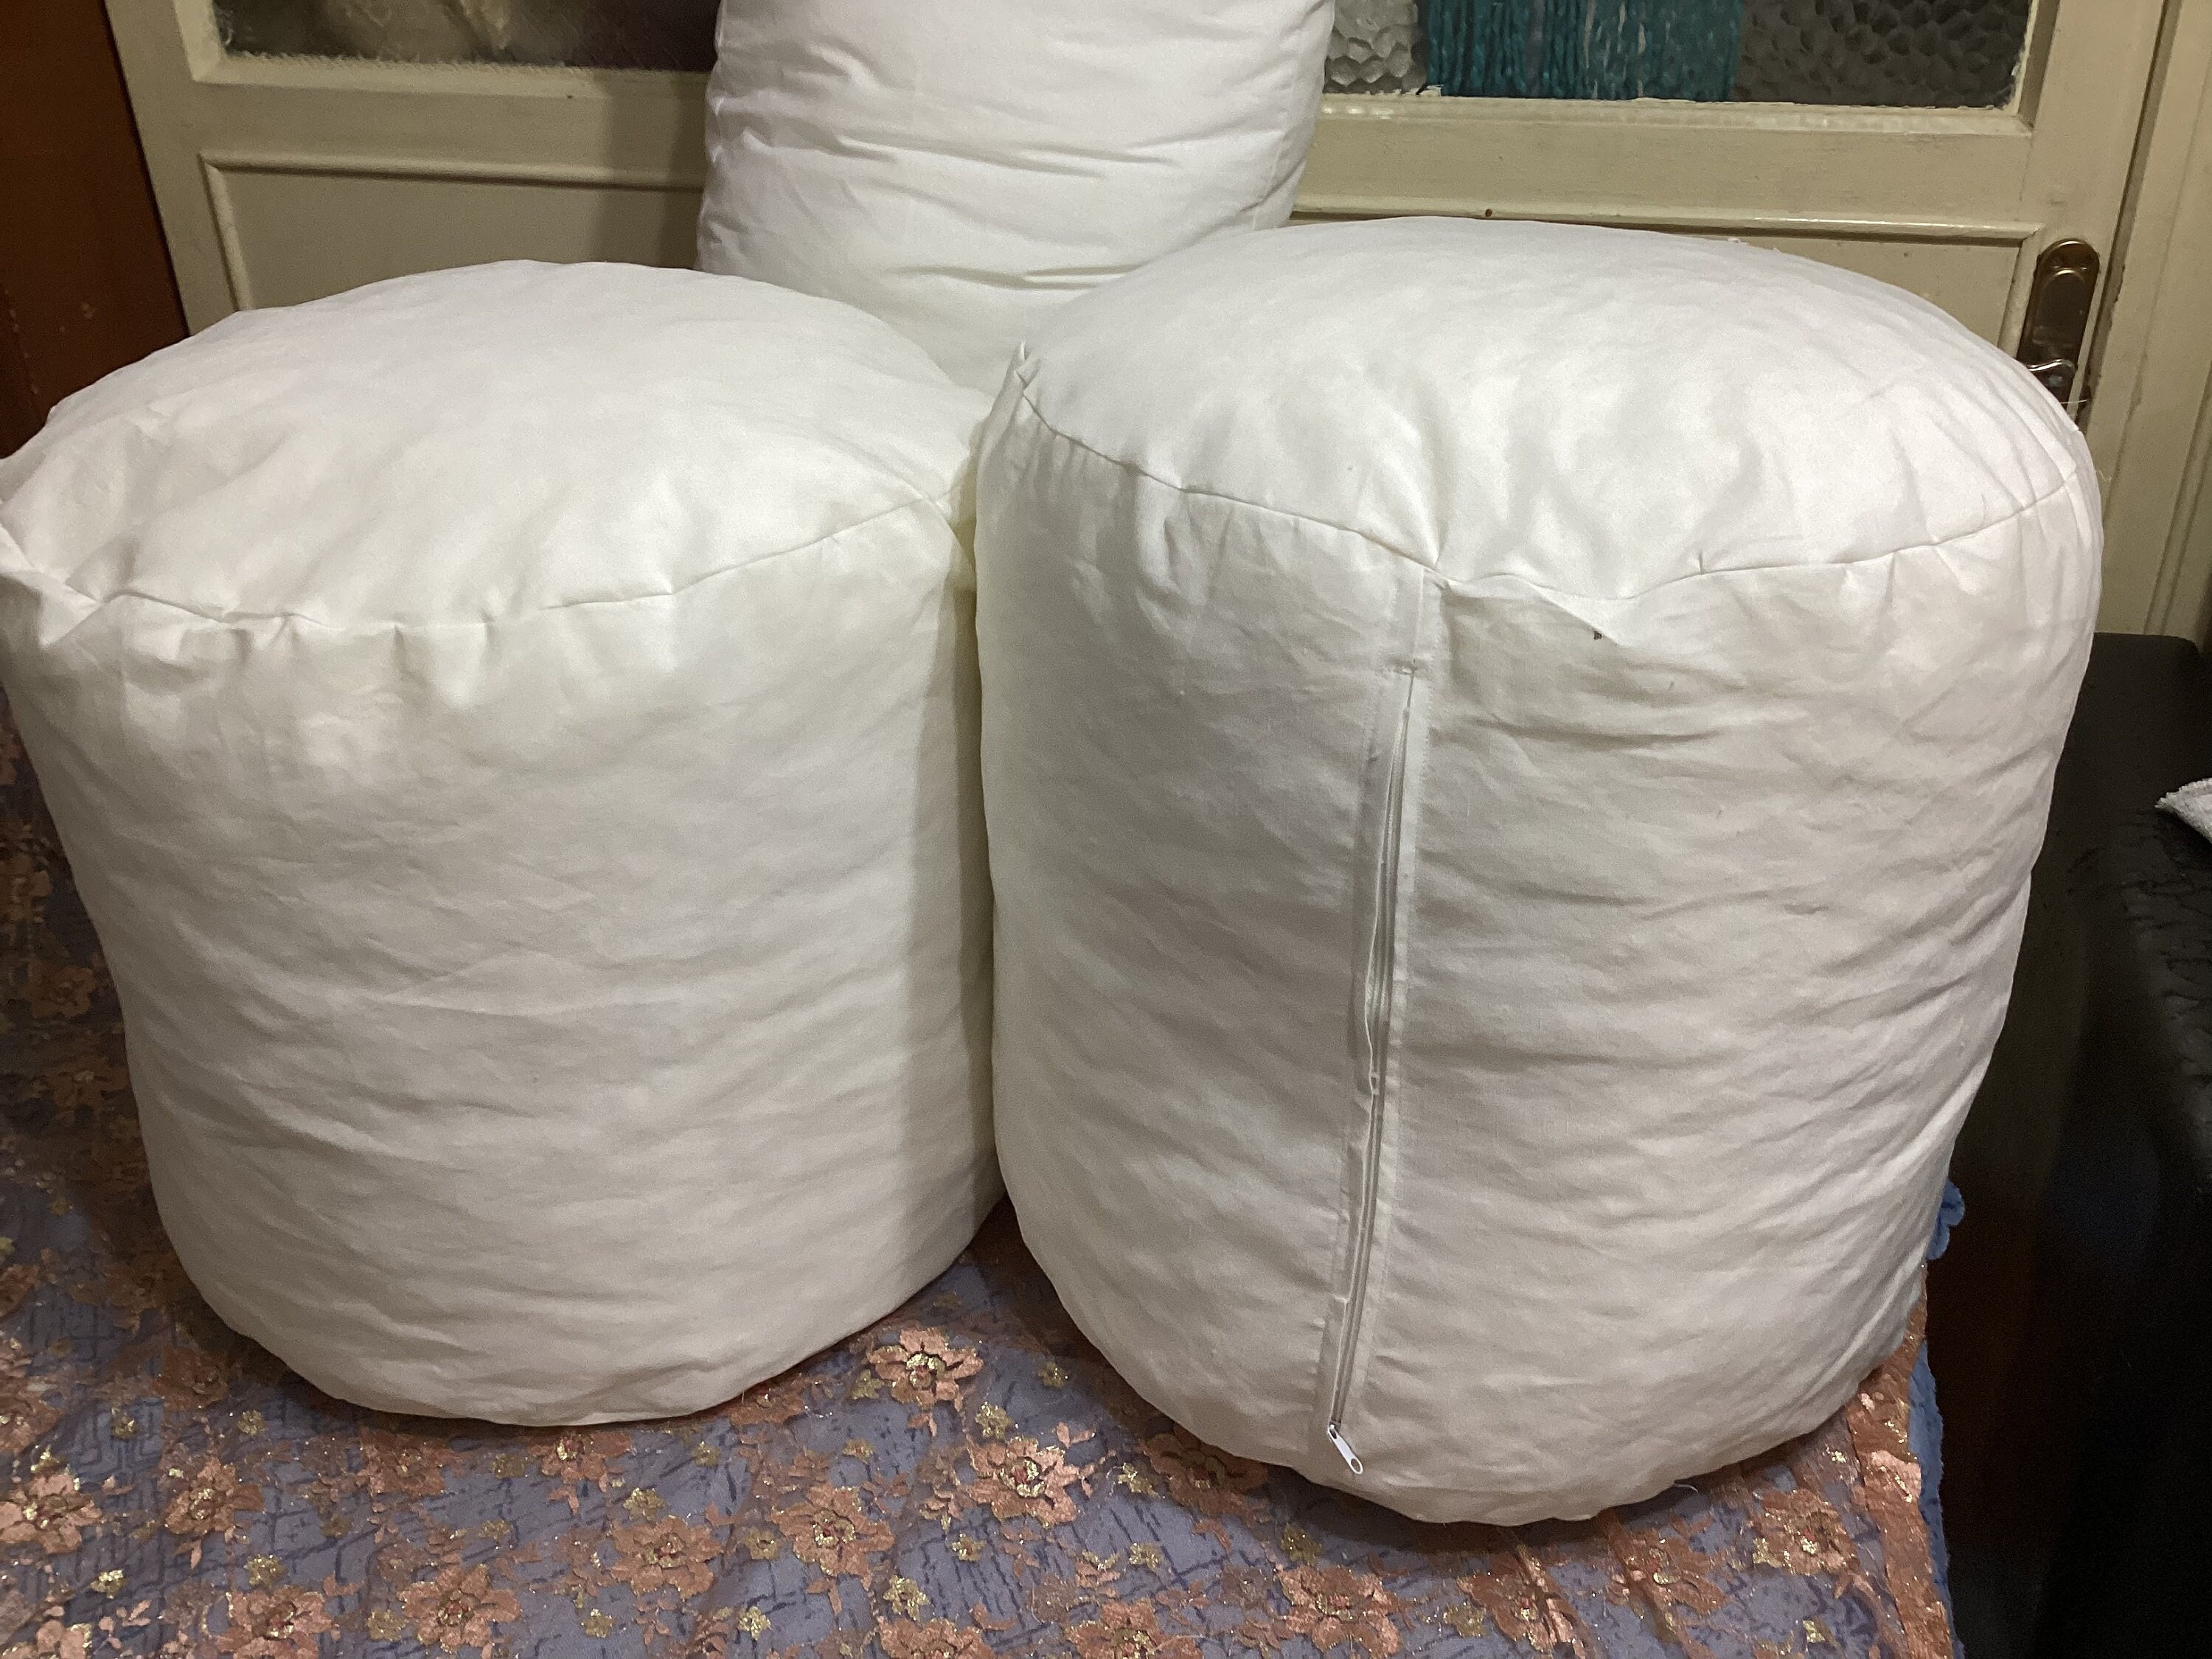 100g Polyester Fiber Fill Fluff Stuffing High Resilience Fill Fiber for  Stuffed Animal Crafts Amigurumi Crochet Cushion Stuffing - AliExpress